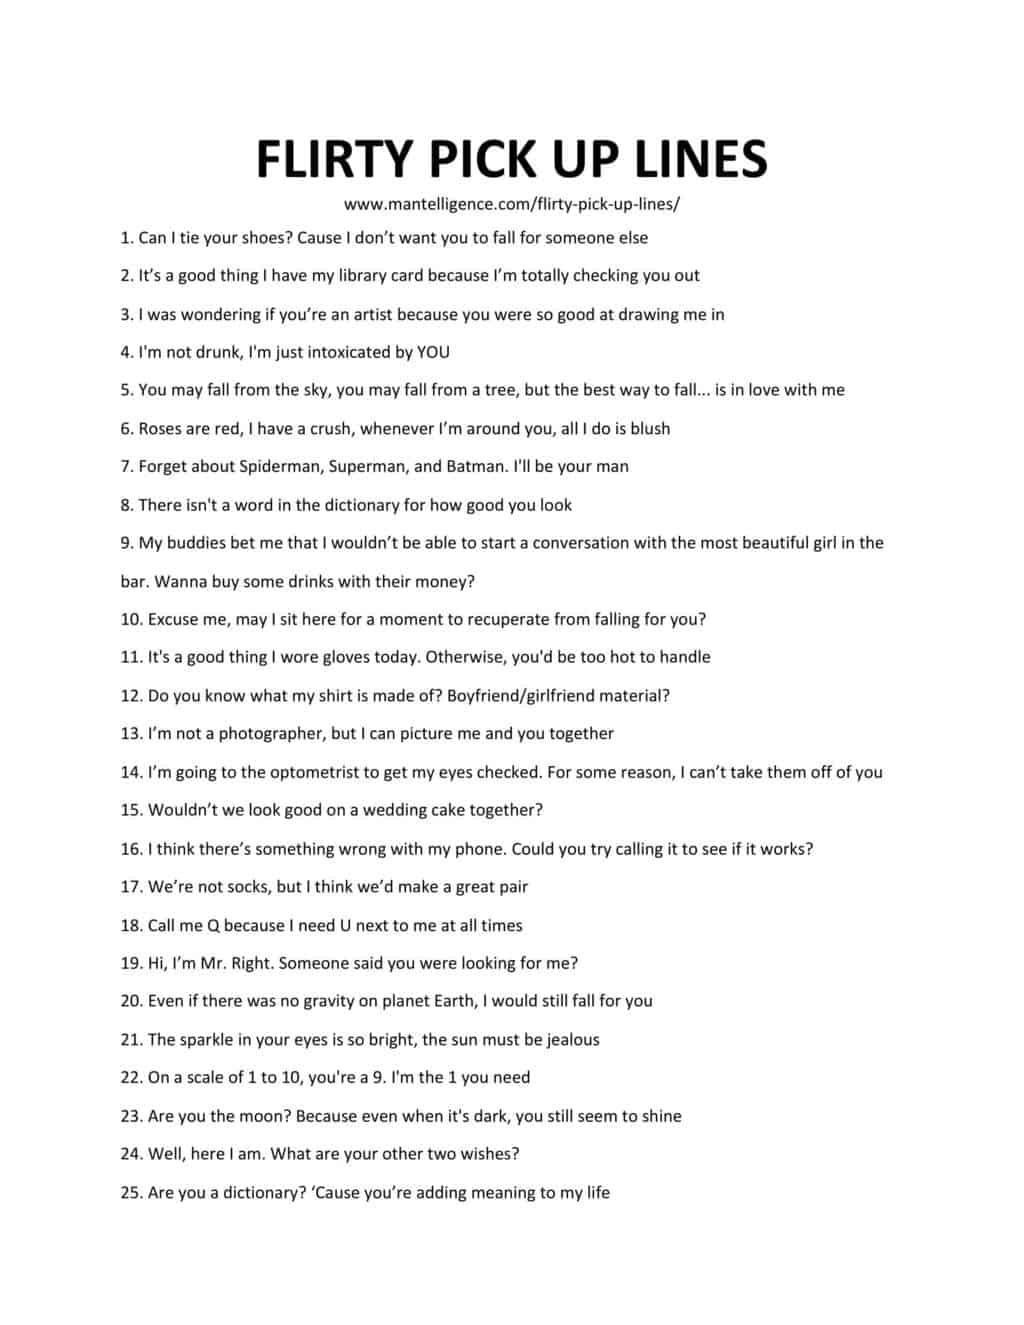 pick up lines for flirting